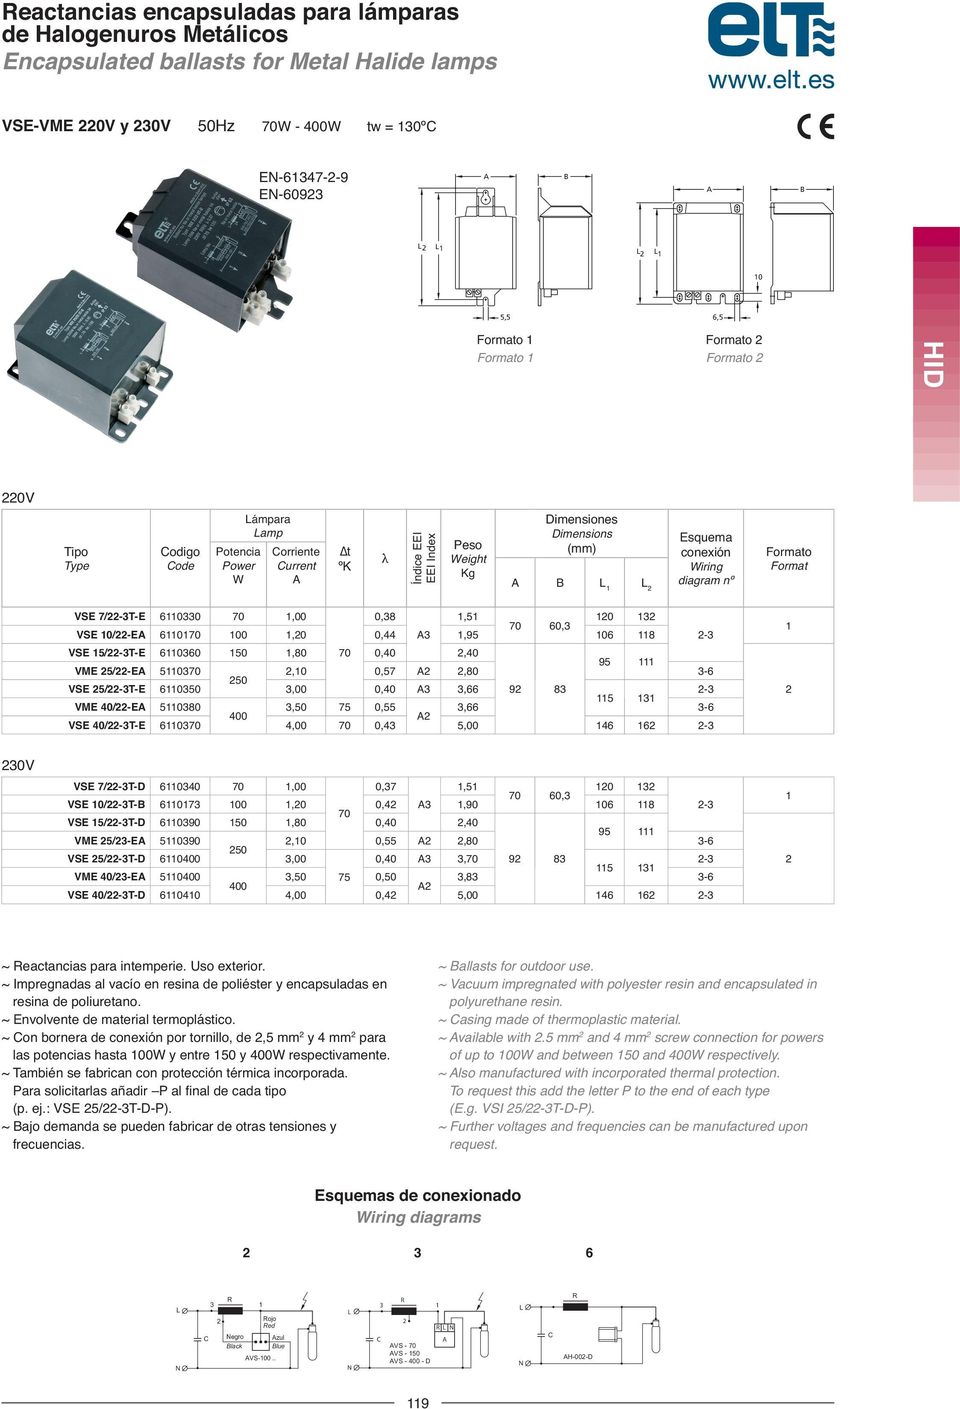 8 VSE 5/TD 090 50 95 VME 5/E 5090 50 VSE 5/TD 0 9 8 5 VME 40/E 50 75 VSE 40/TD 040 4 ~ eactancias para intemperie. Uso exterior.